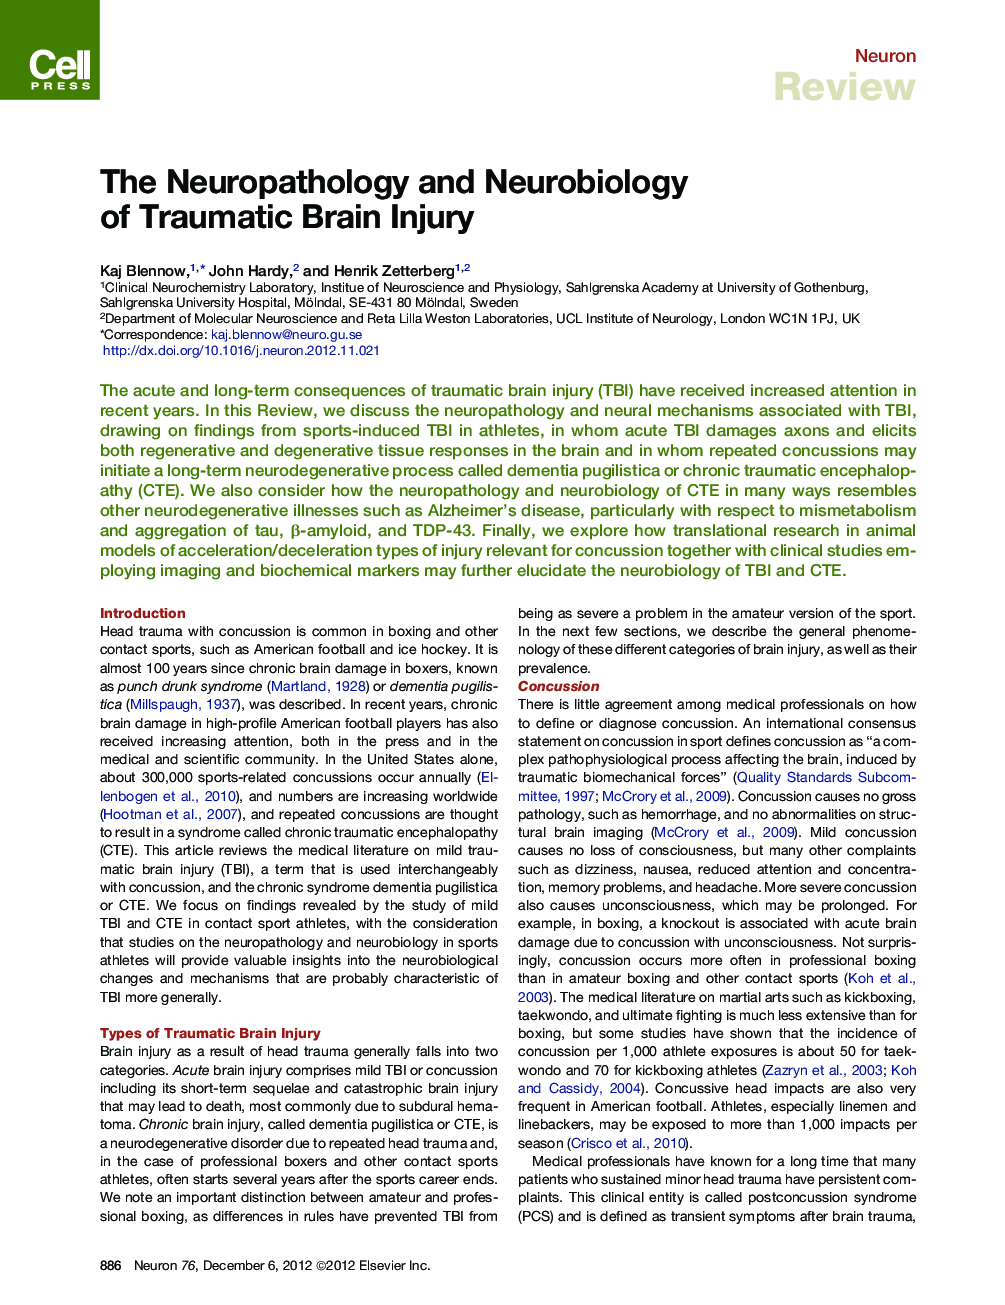 The Neuropathology and Neurobiology of Traumatic Brain Injury